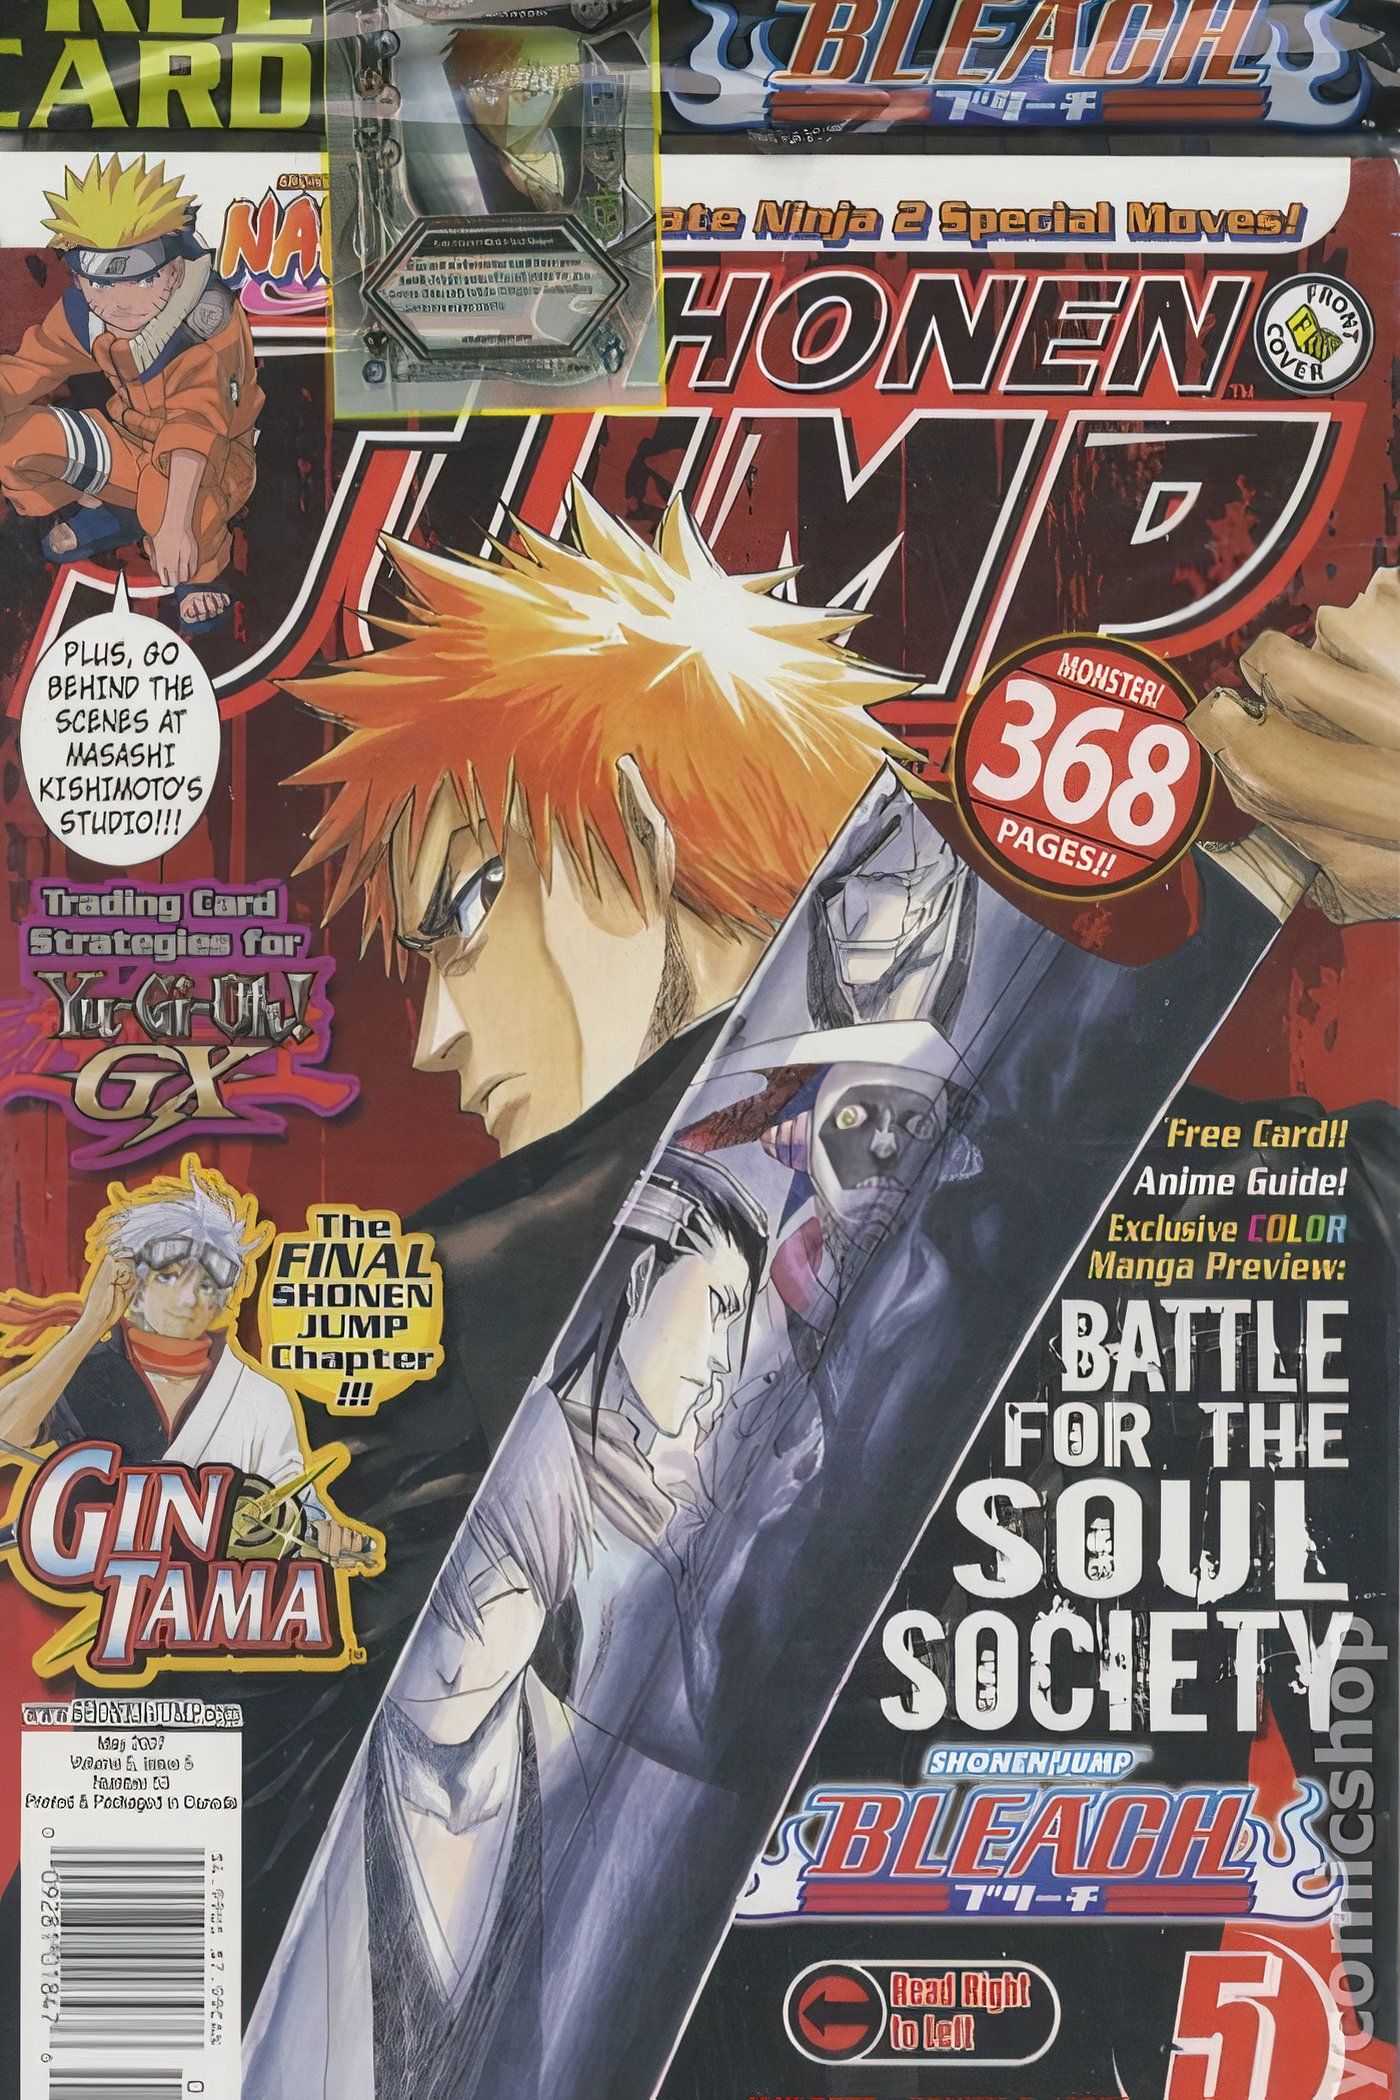 American Weekly Shonen Jump 53 com Ichigo de Bleach